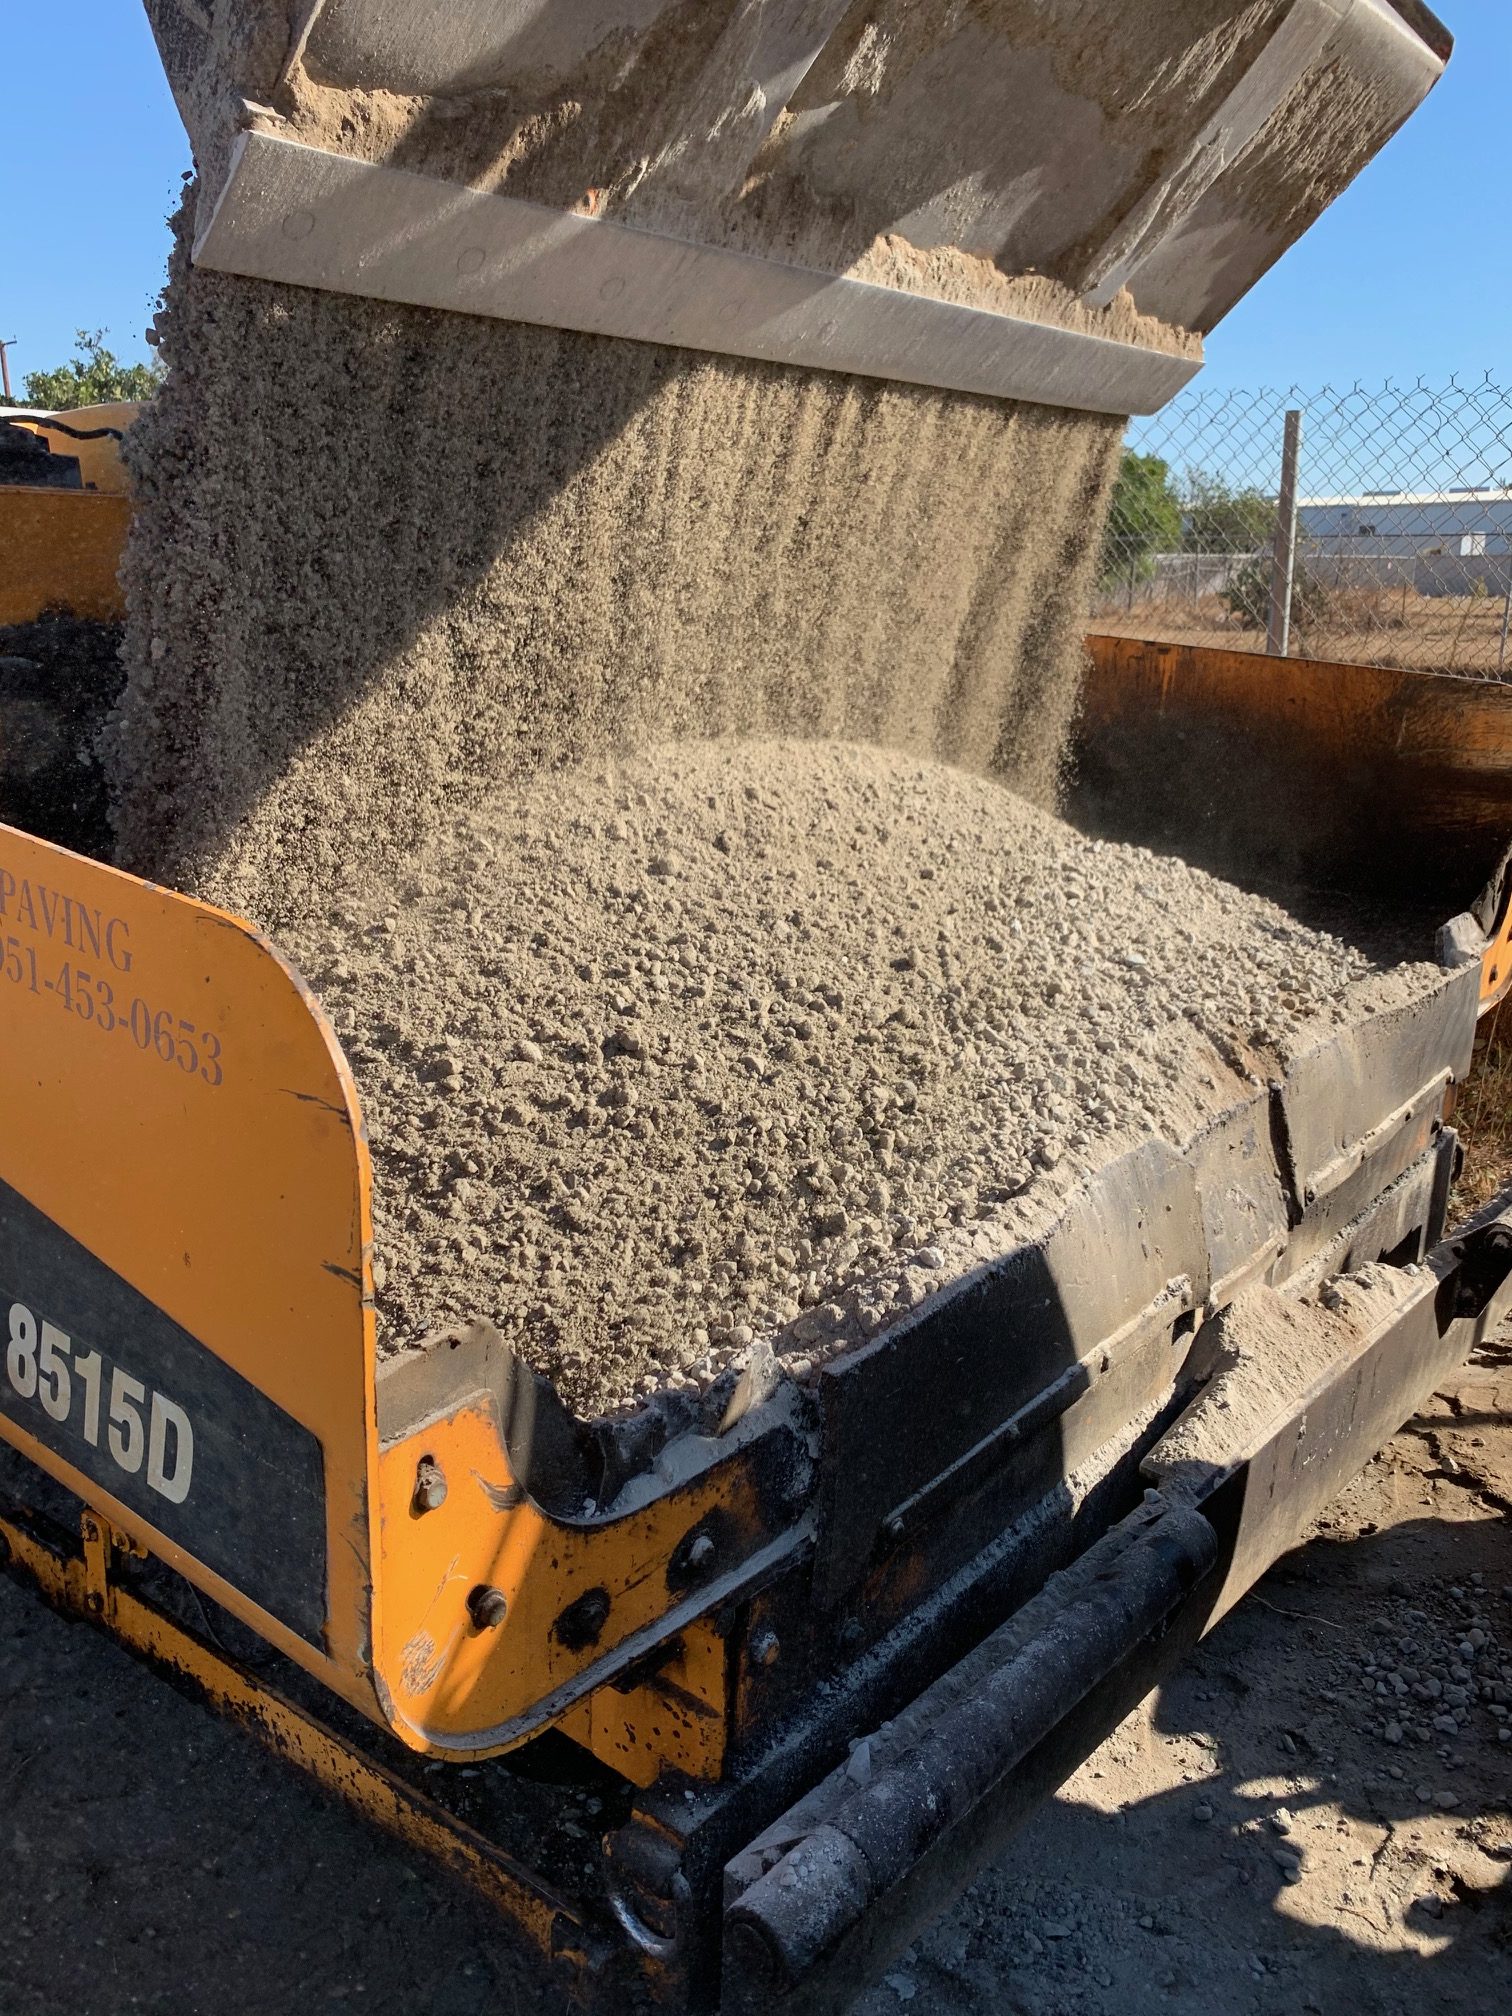 A machine pours gravel into a yellow-black paving vehicle